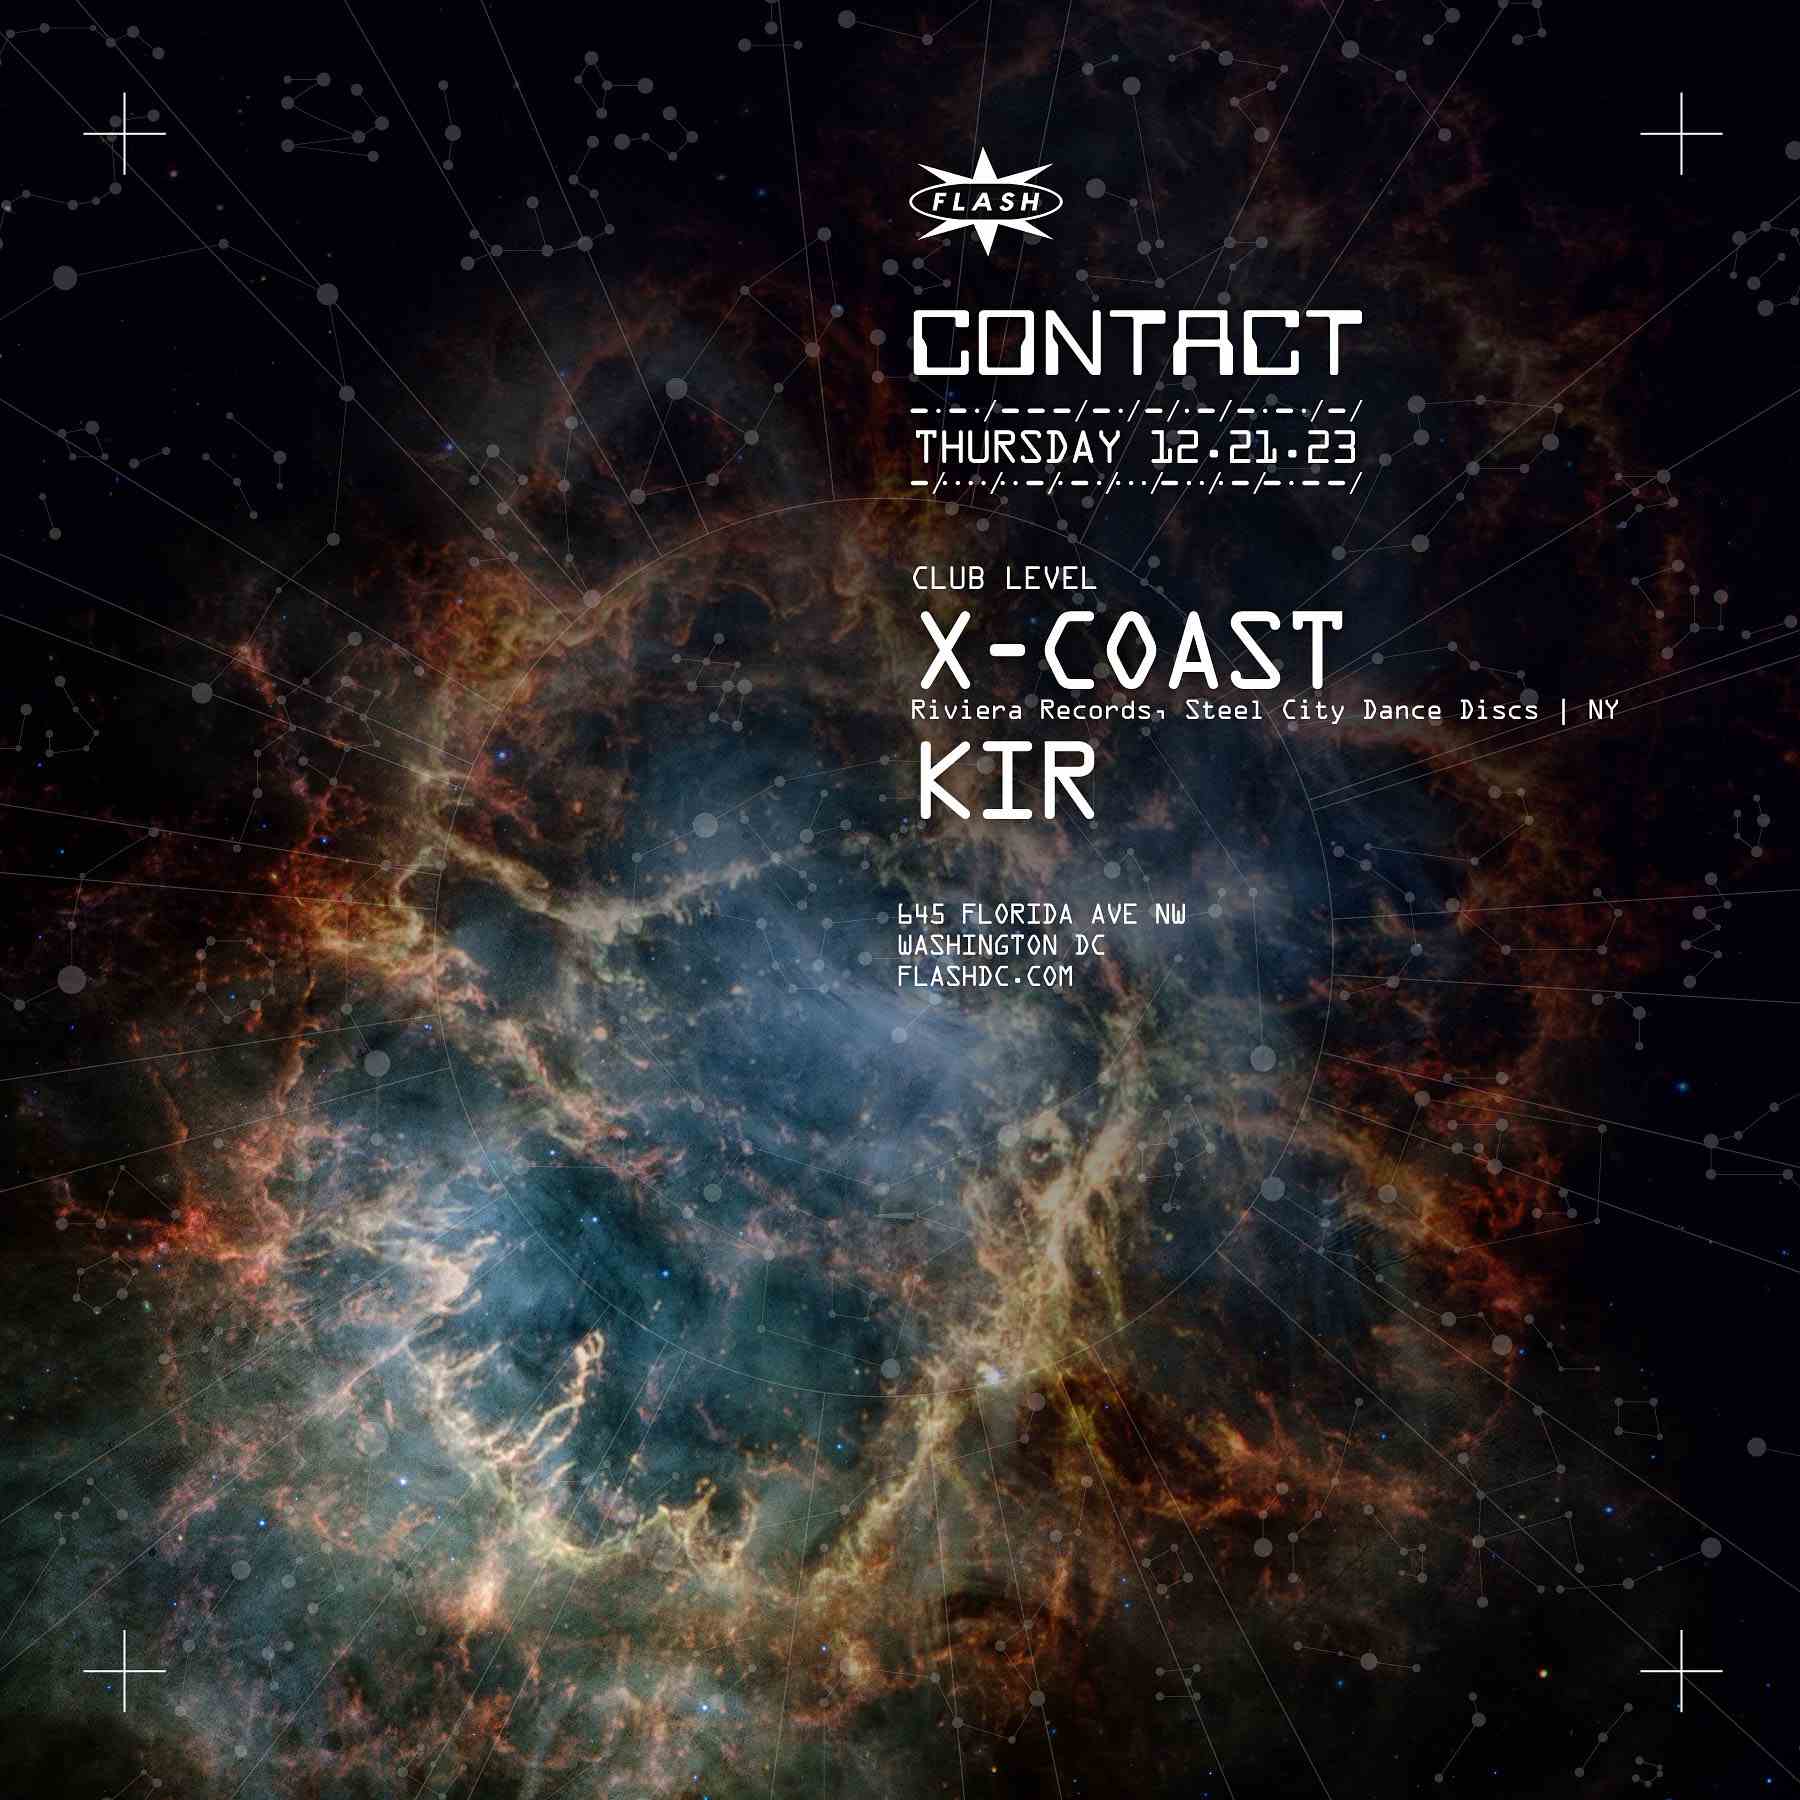 CONTACT: X-Coast event flyer